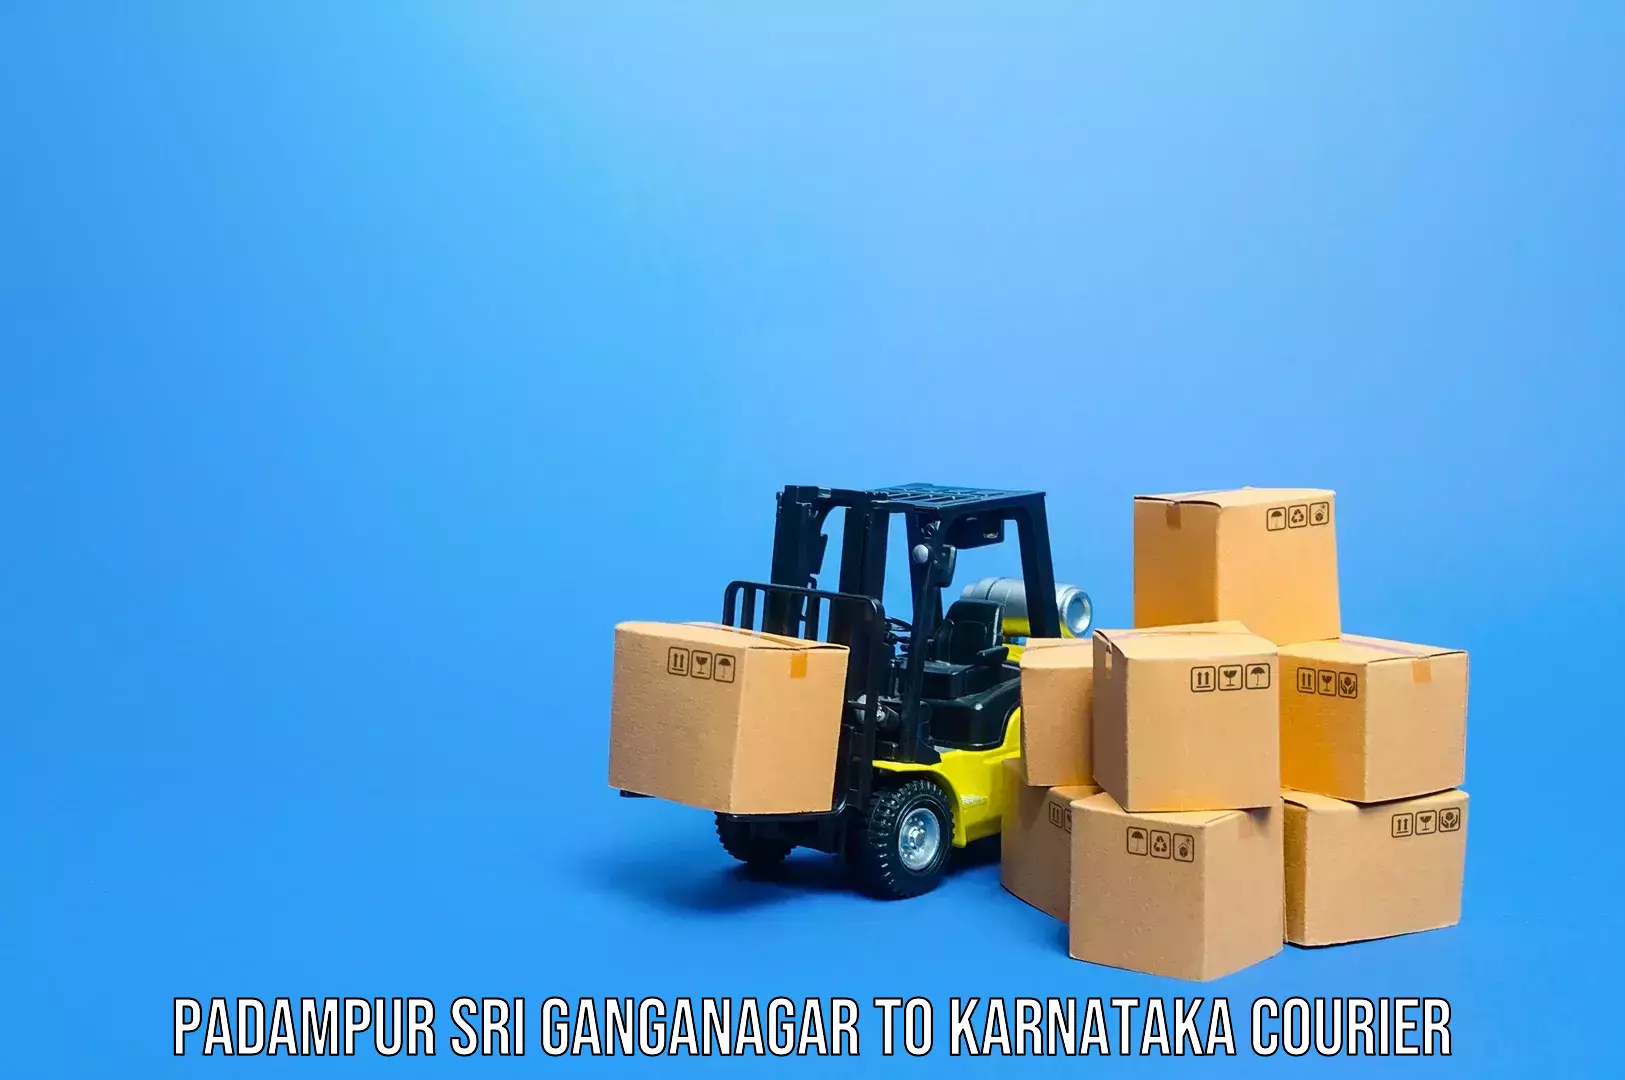 Baggage shipping service Padampur Sri Ganganagar to Yaragatti